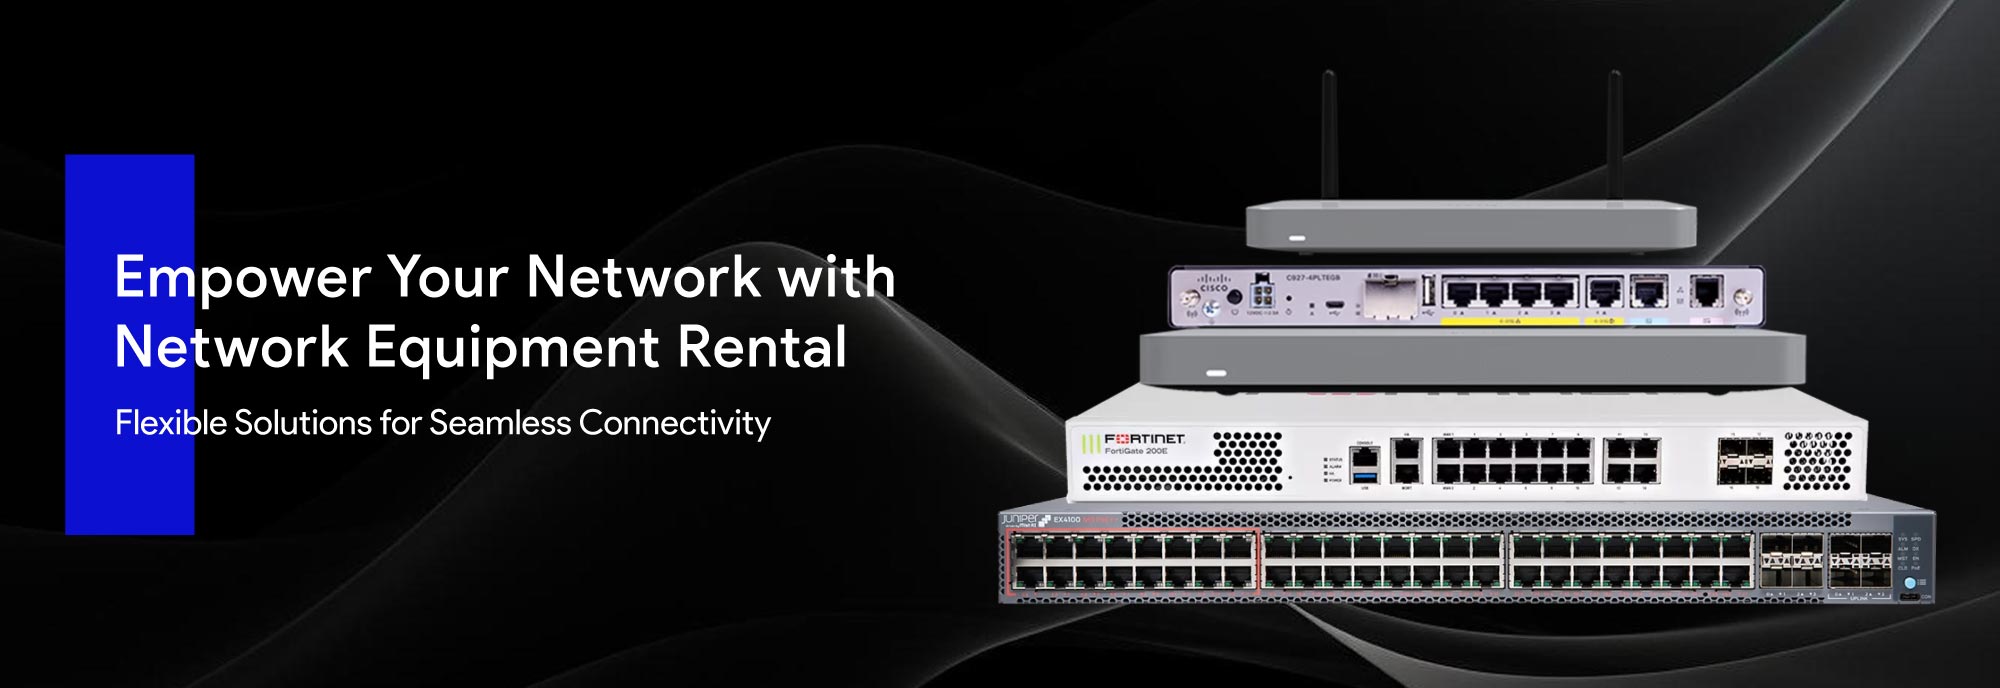 Network-Equipment-Rental